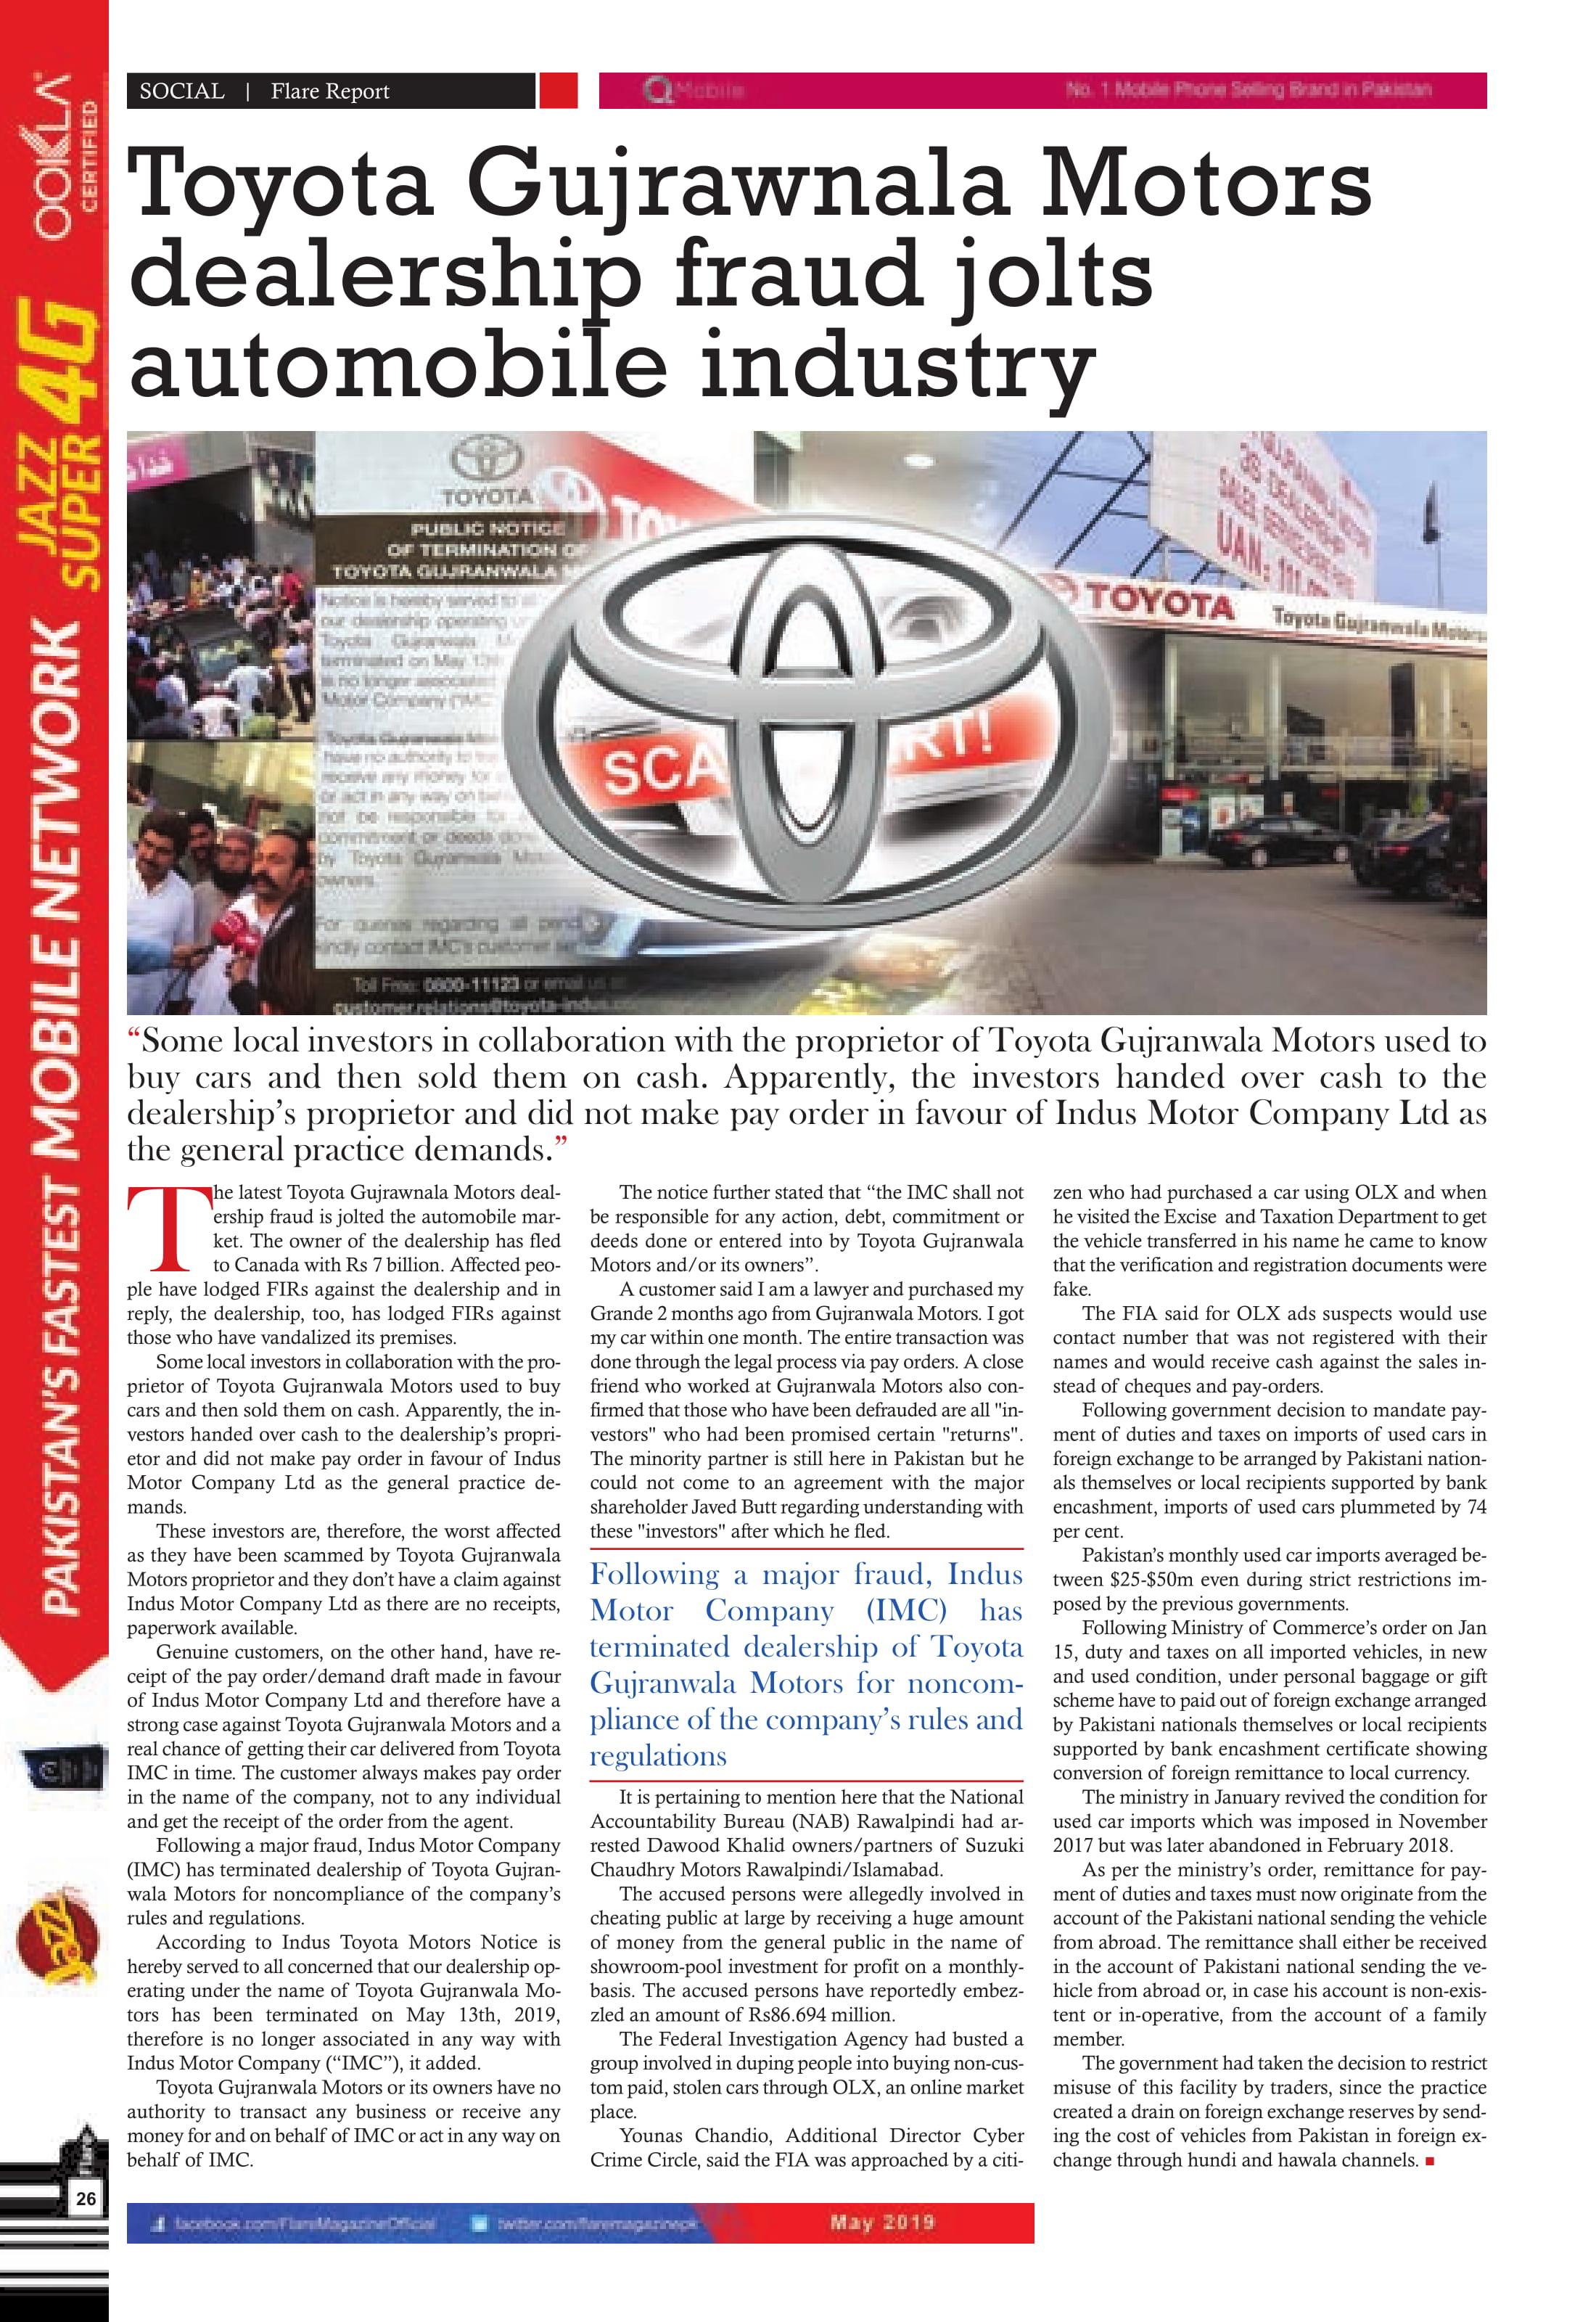 Toyota Gujranwala Motors dealership fraud jolts automobile industry